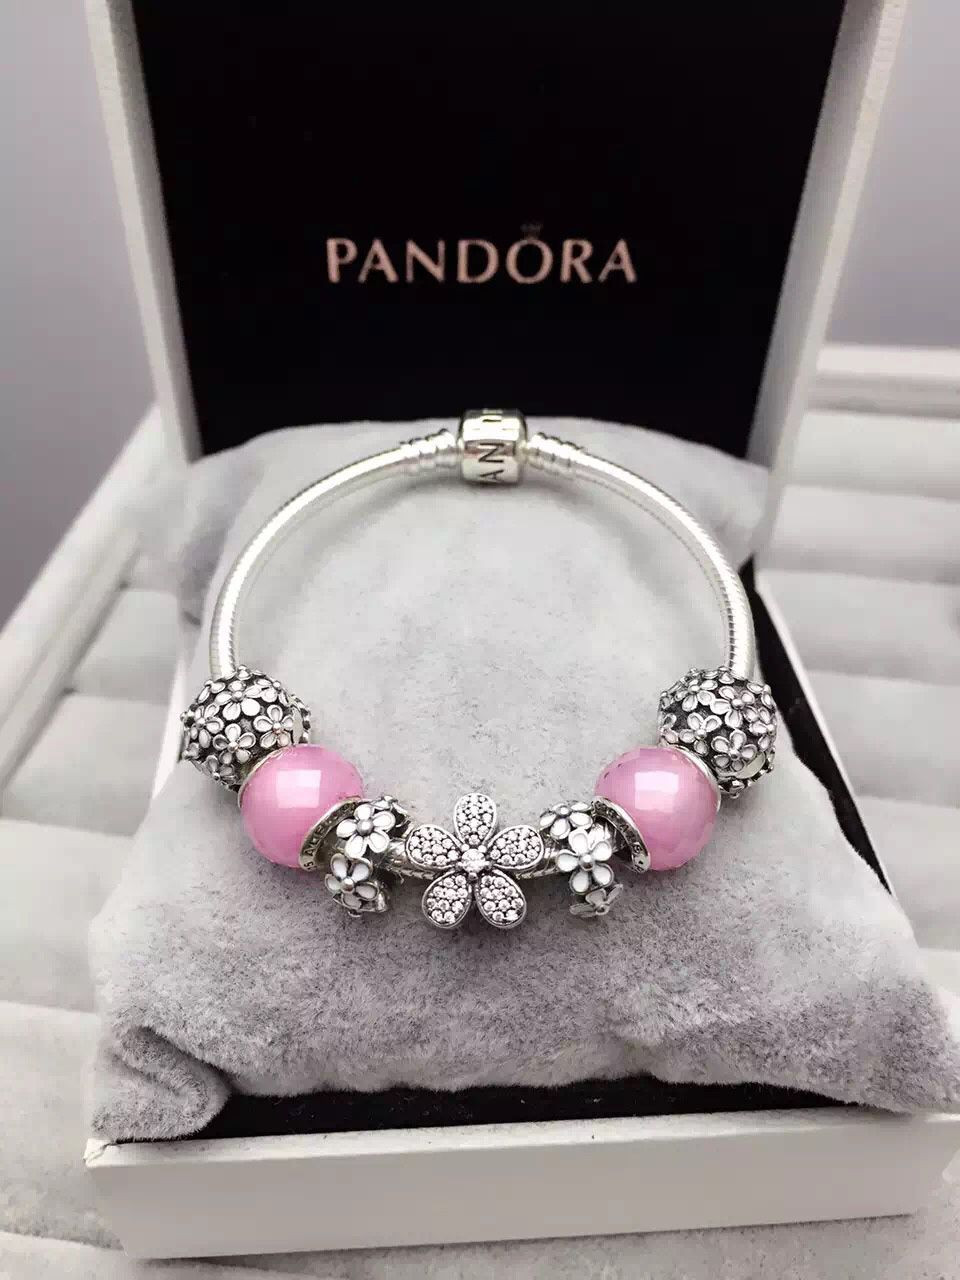 Pandora Charm Bracelet Sale
 OFF $199 Pandora Charm Bracelet Pink White Hot